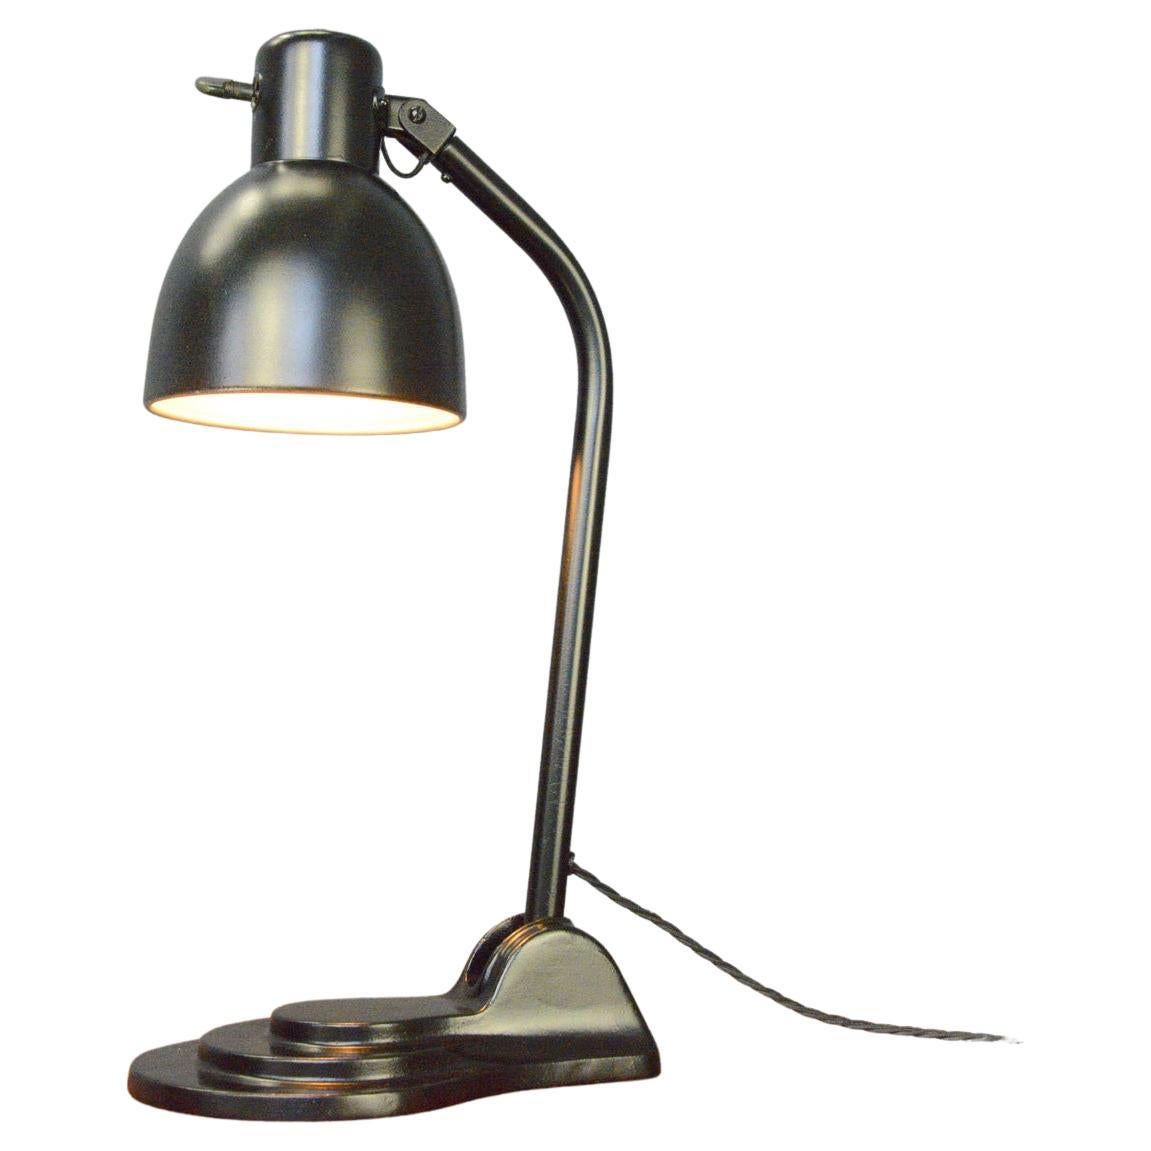 Bauhaus Desk Lamp by Hala, Circa 1930s